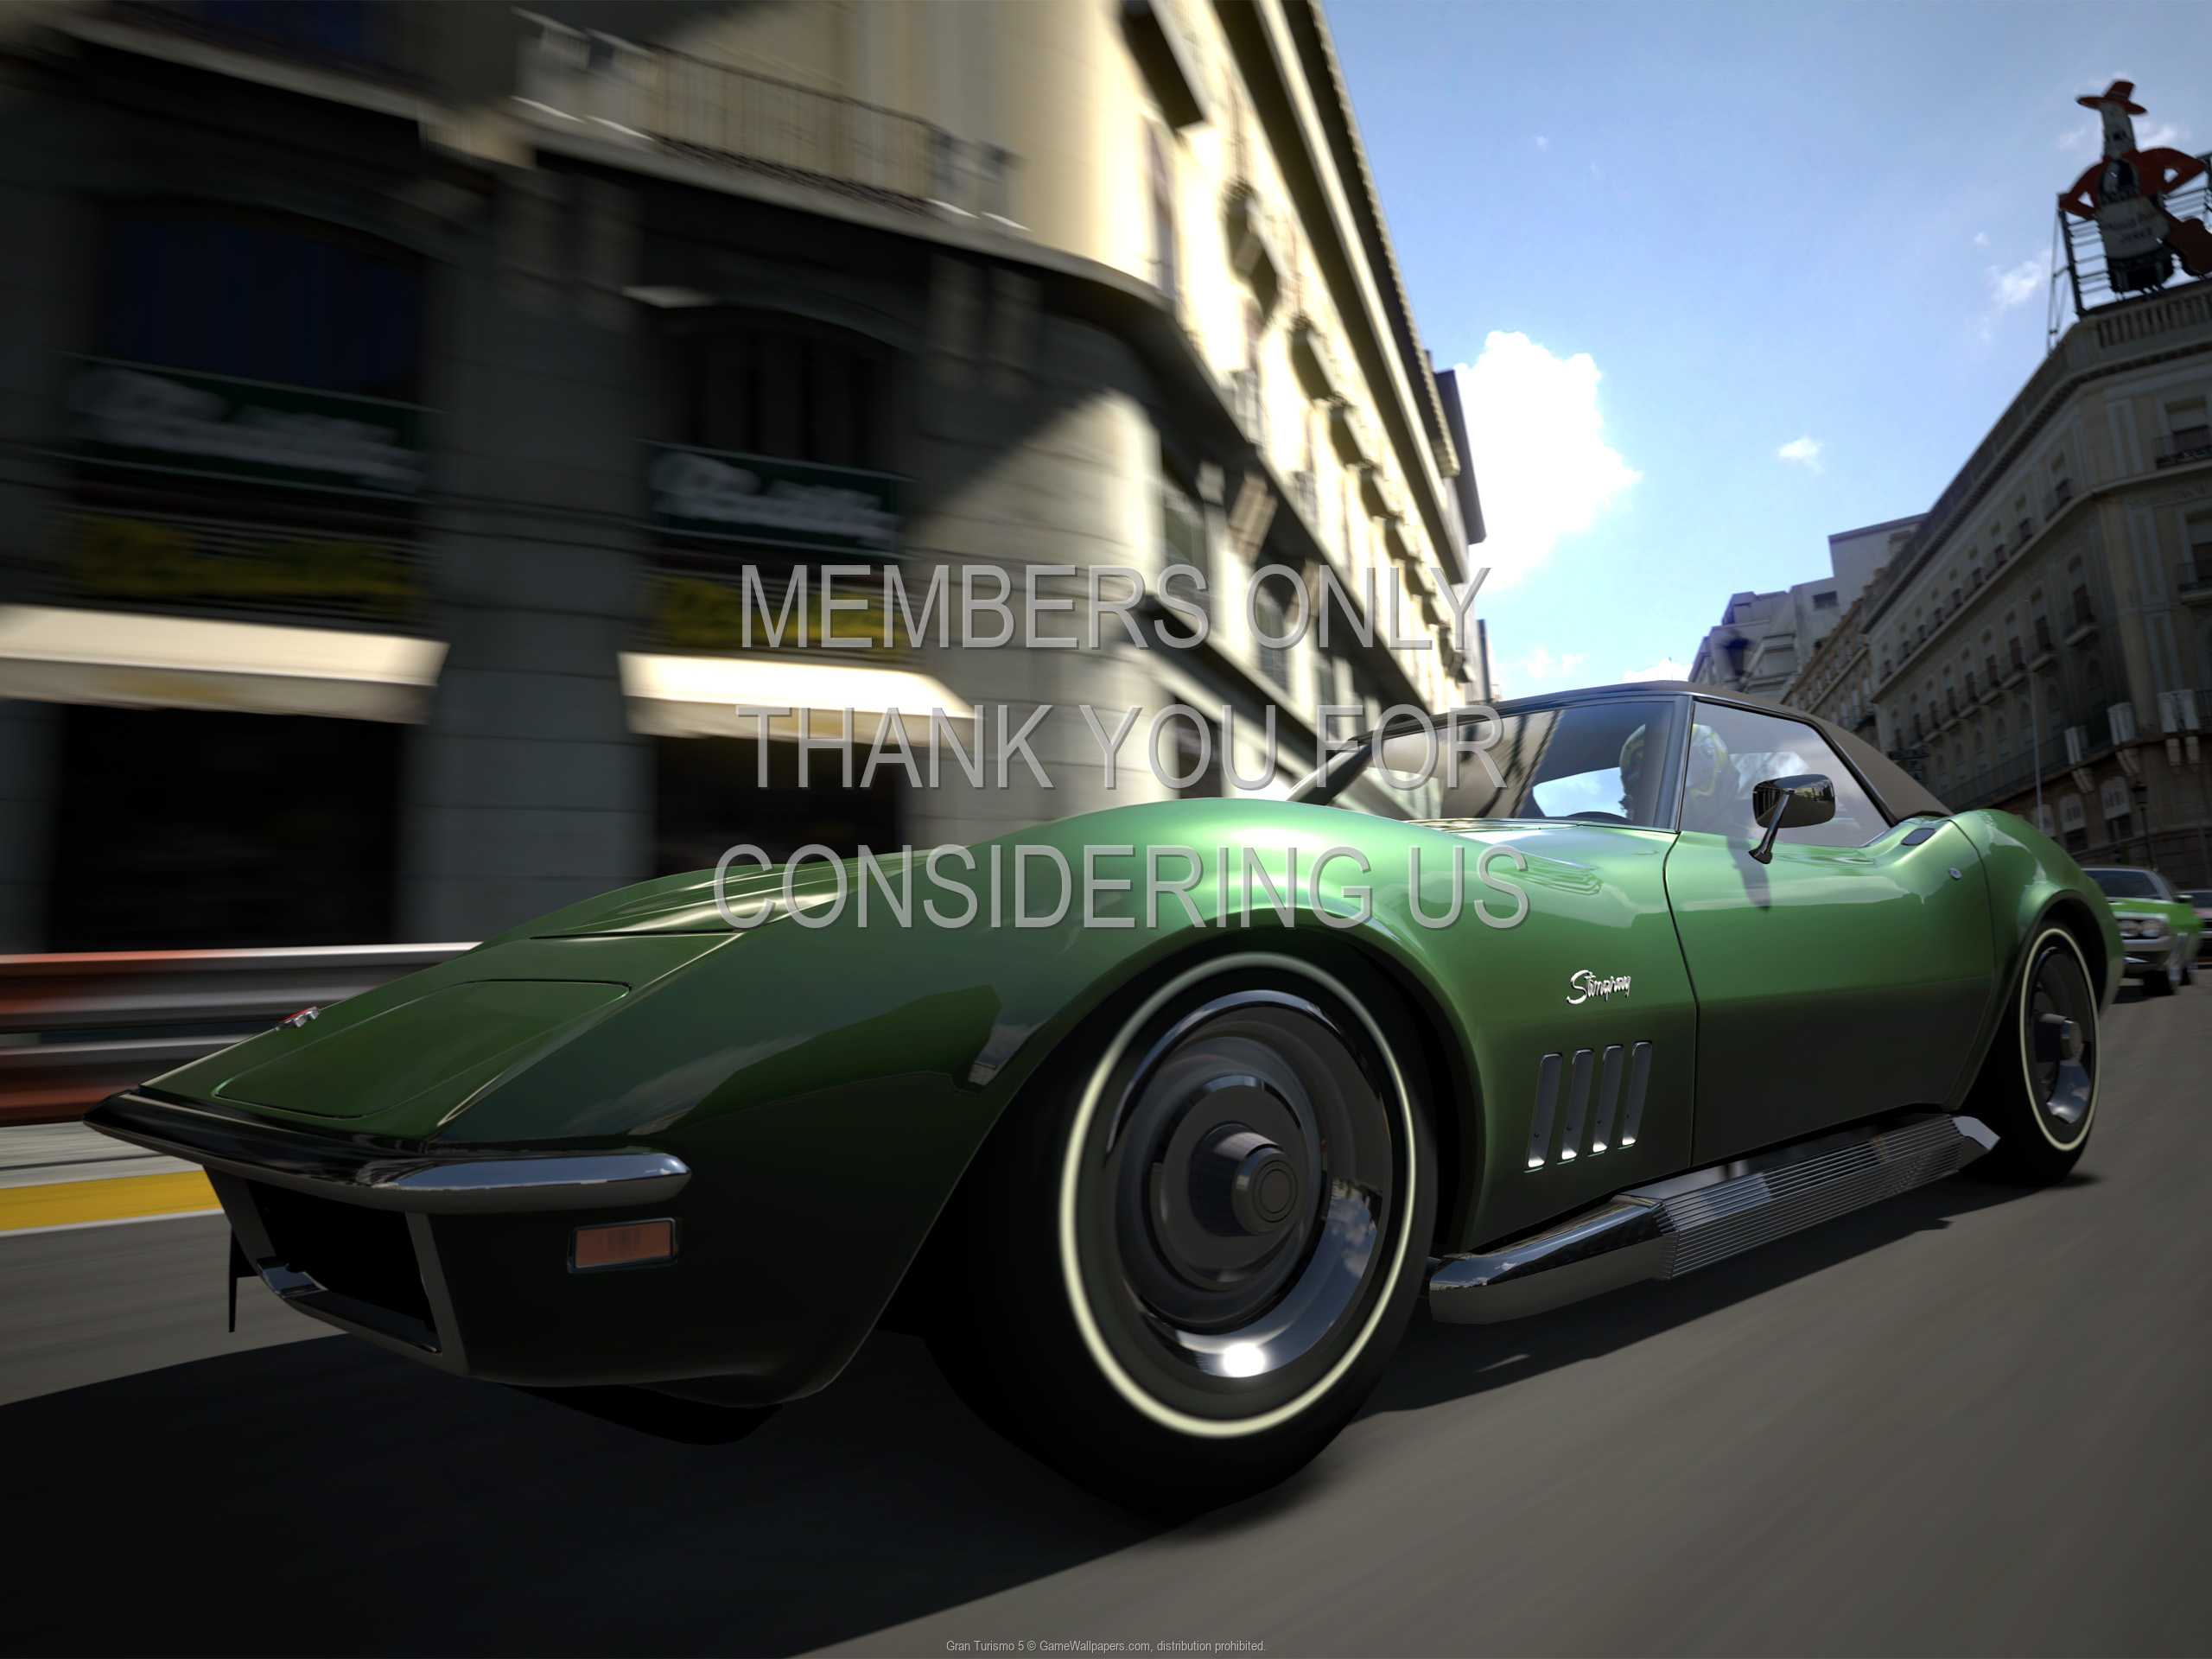 Gran Turismo 5 1080p Horizontal Mobile wallpaper or background 15